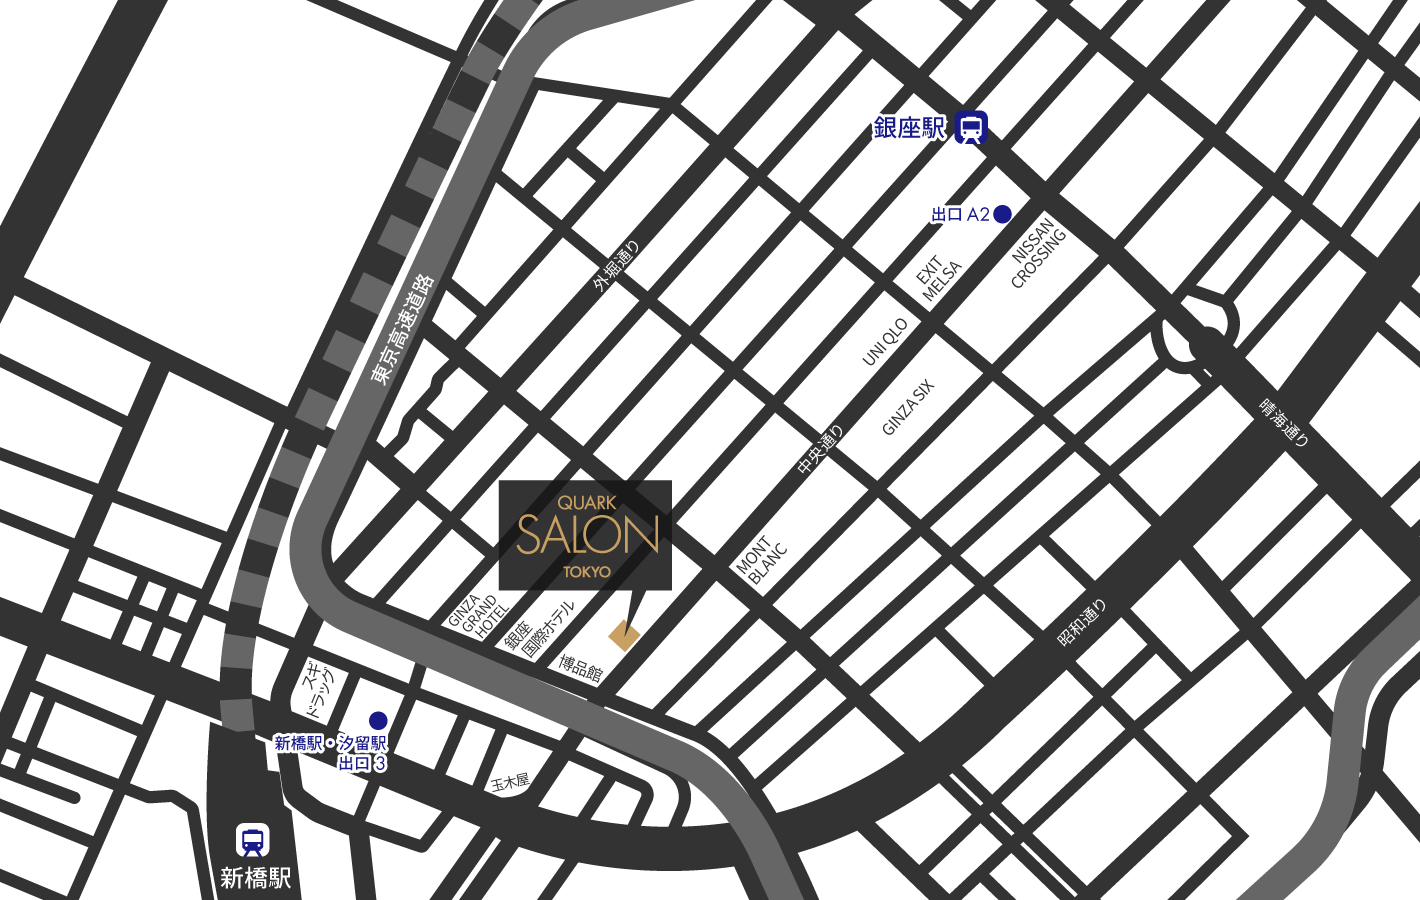 QUARK SALON Tokyo map